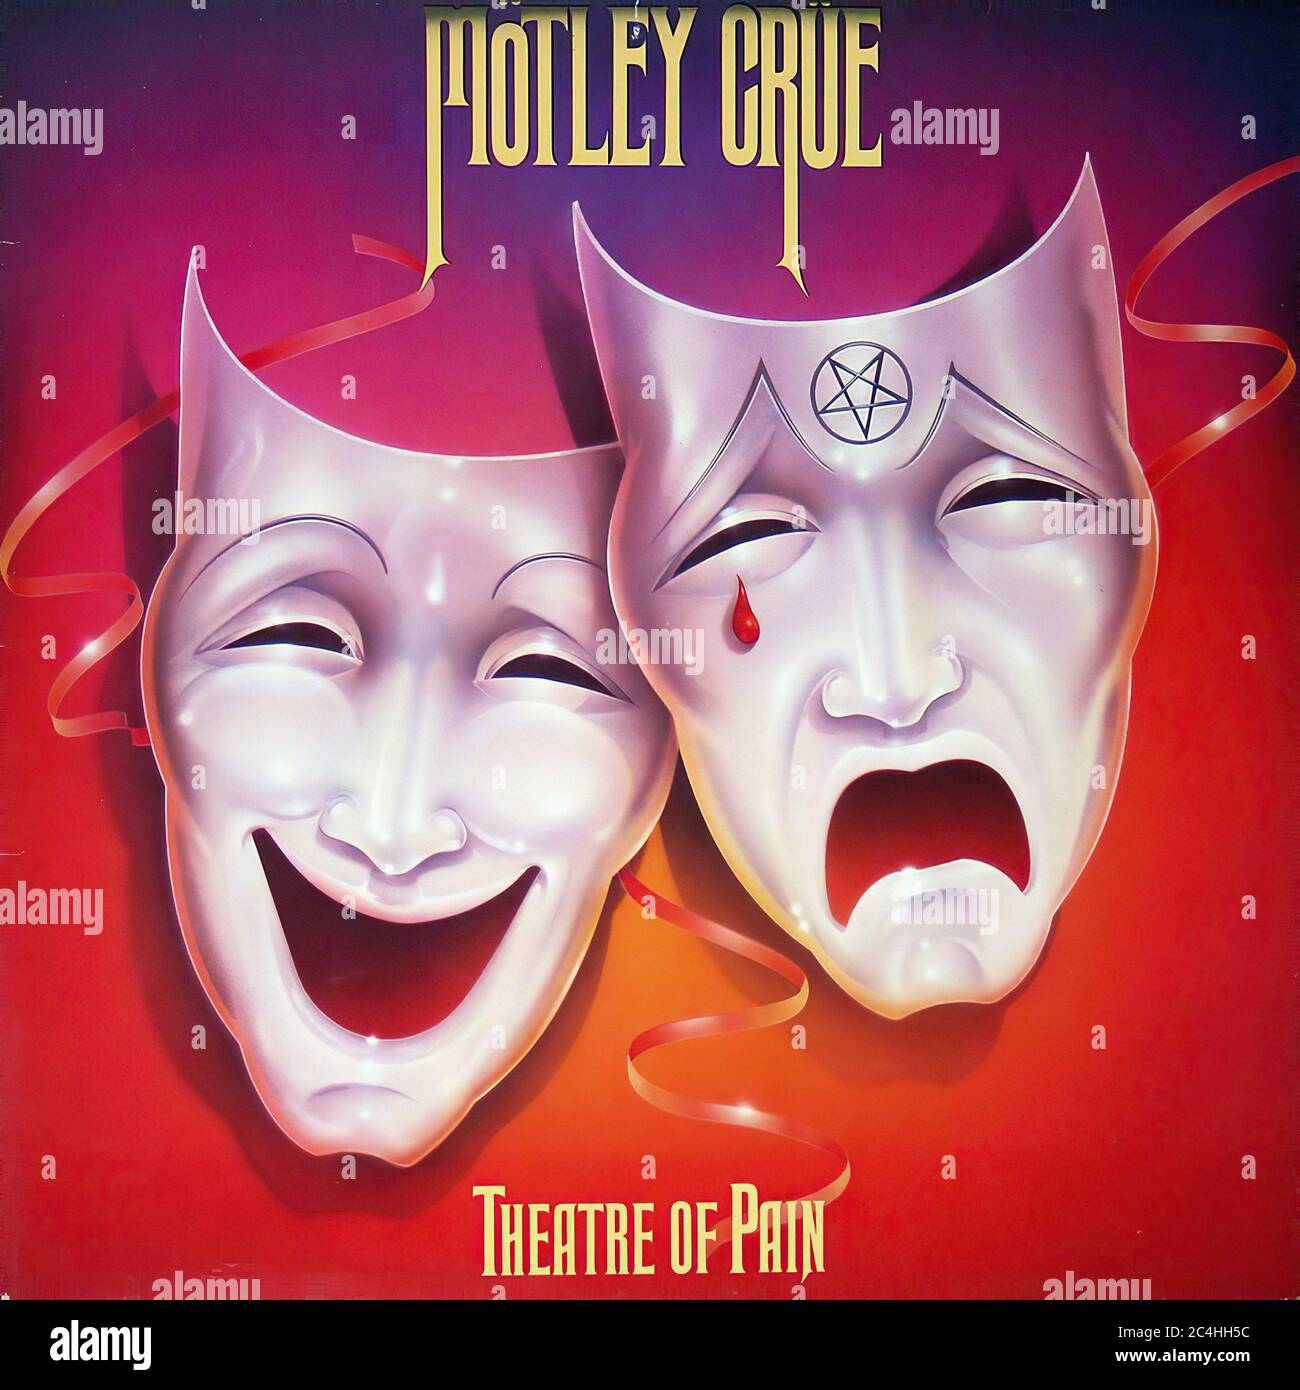 Motley Crue Theatre of Pain 12'' Vinyl Lp - Vintage Cover Stock Photo -  Alamy